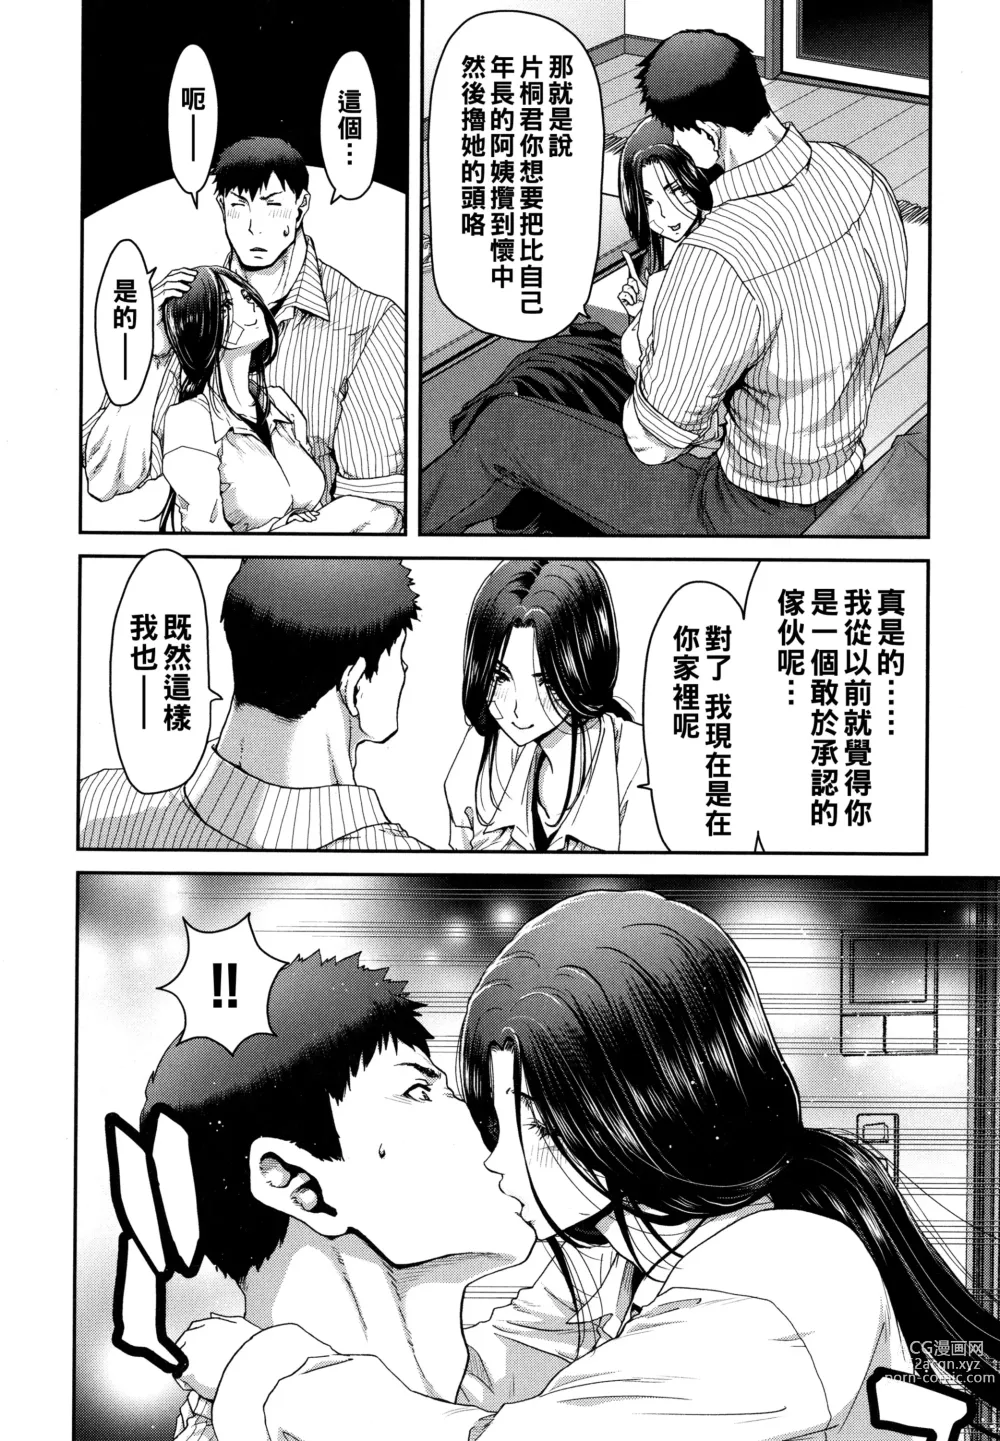 Page 14 of manga Iede Onna o Hirottara - When I picked up a runaway girl.